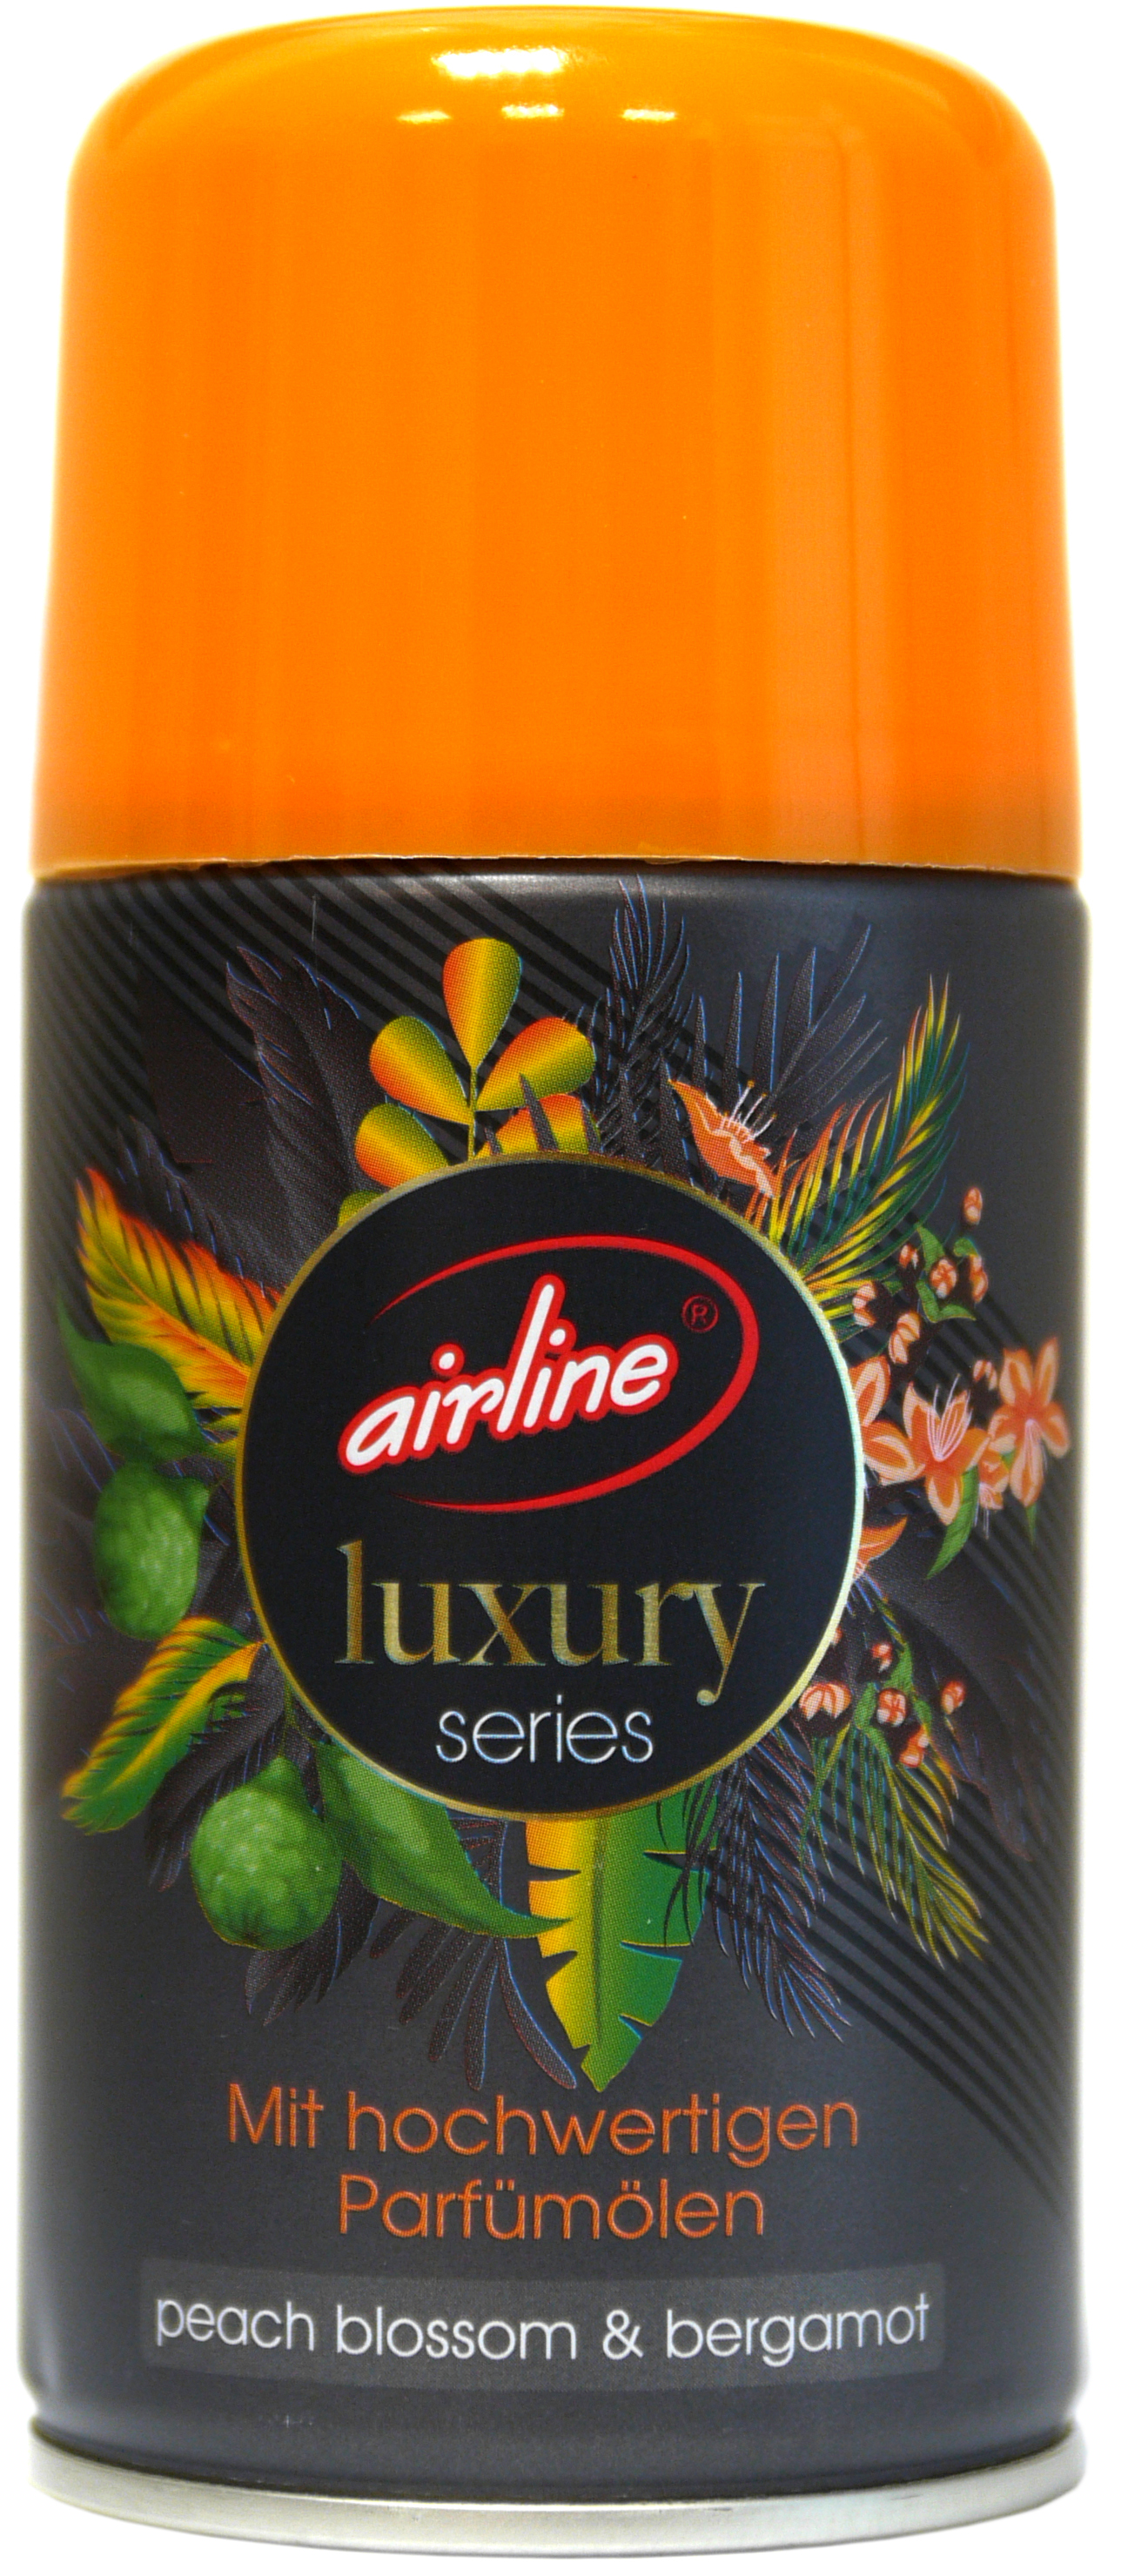 00523 - Luxury series peach blossom & bergamot refill 250 ml